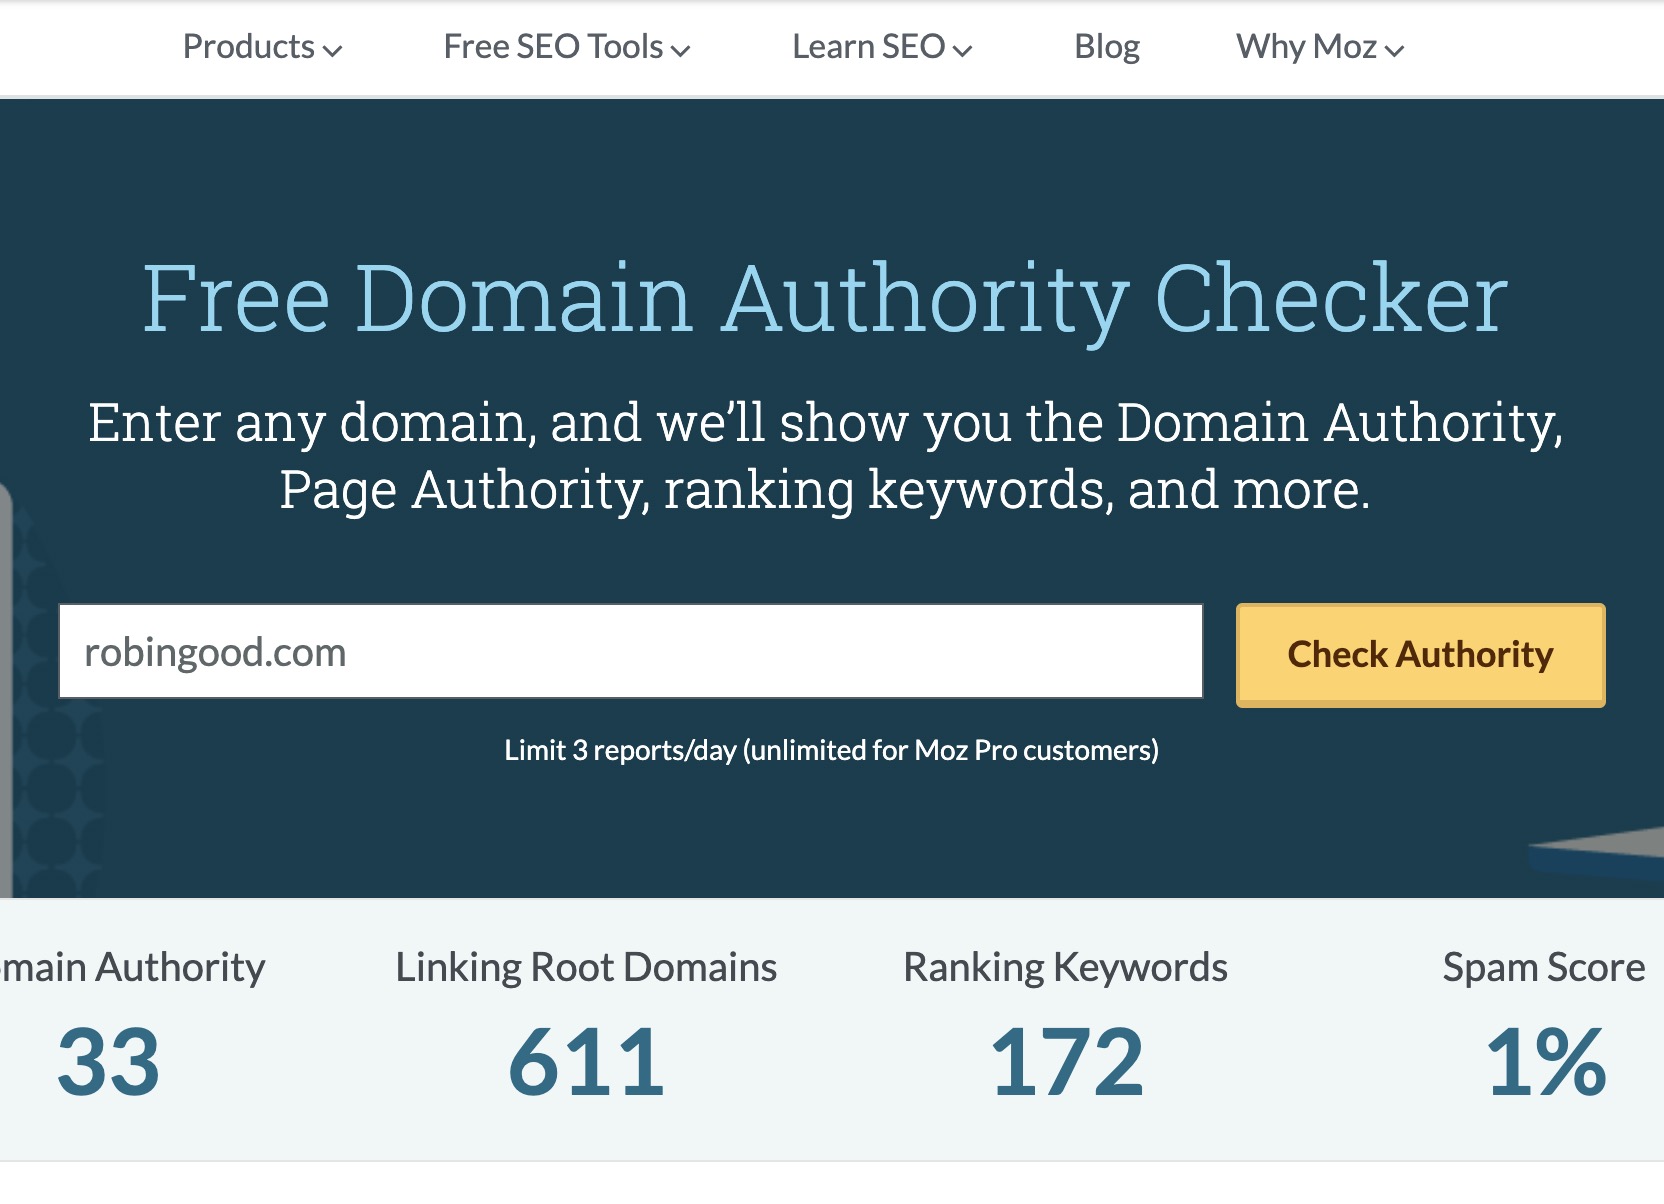 Get Key Authority Metrics for Any Website: MOZ Authority Checker